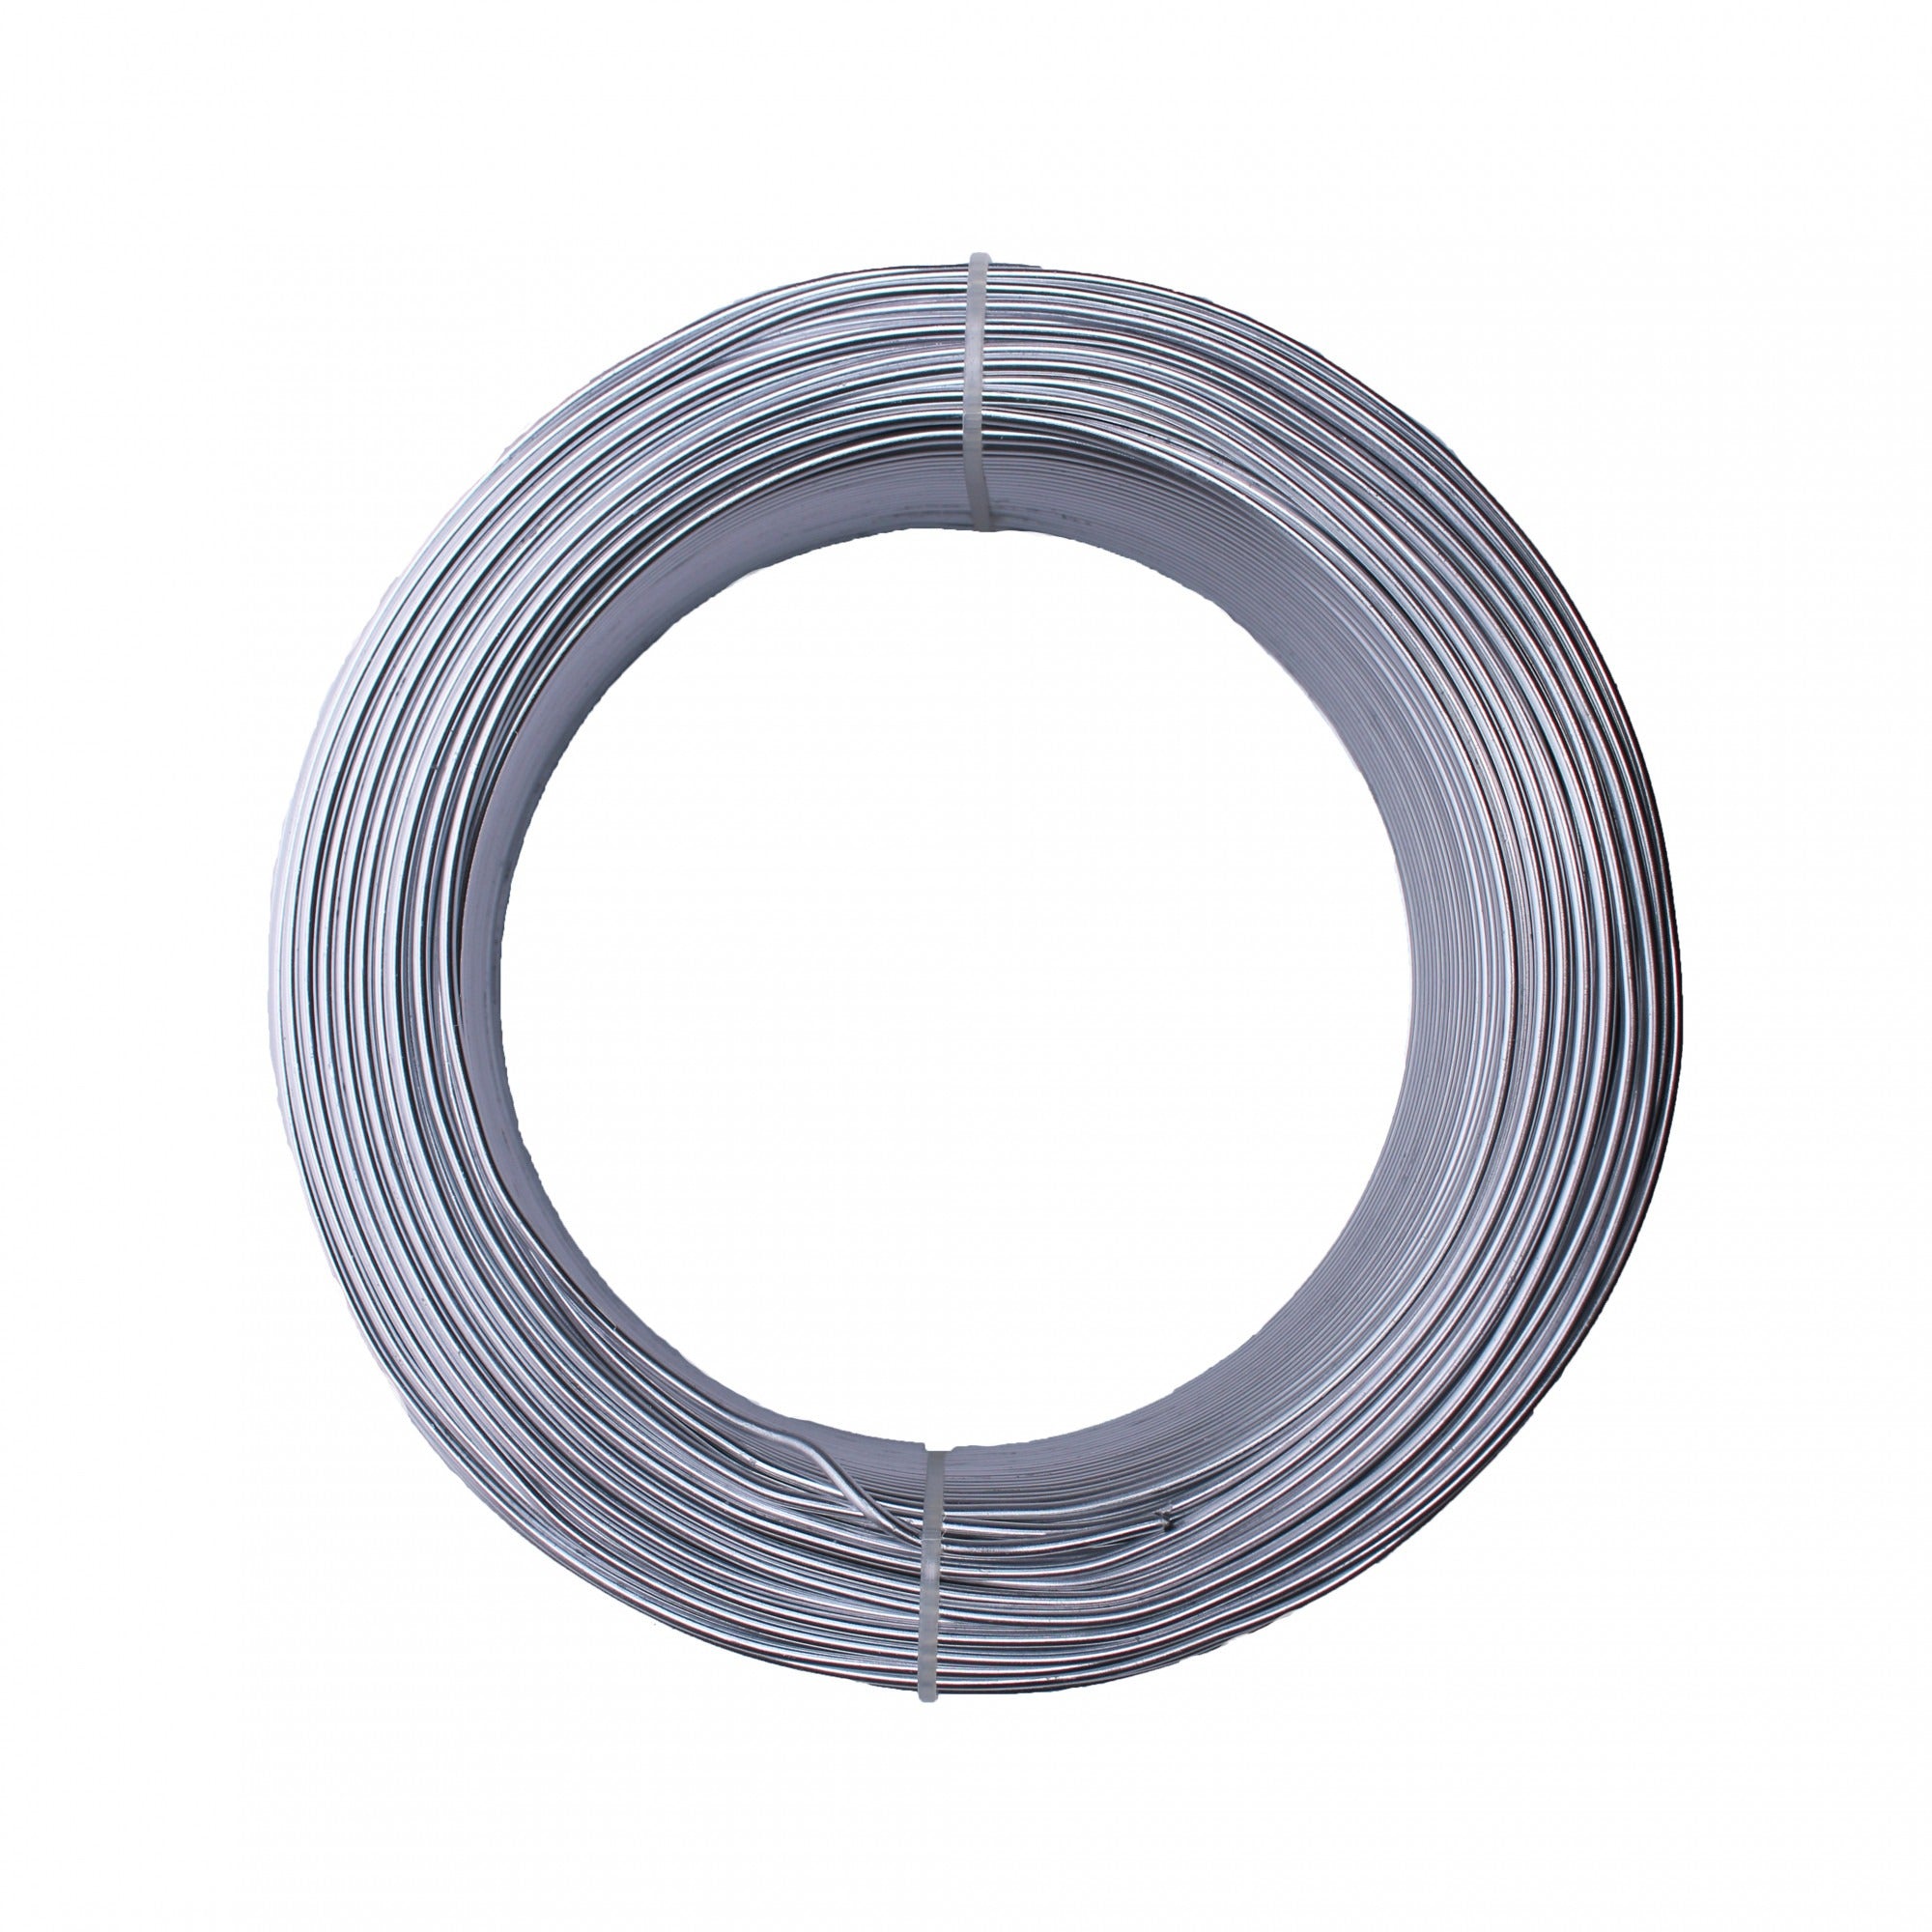 View Silver Aluminium Wire 1kg information